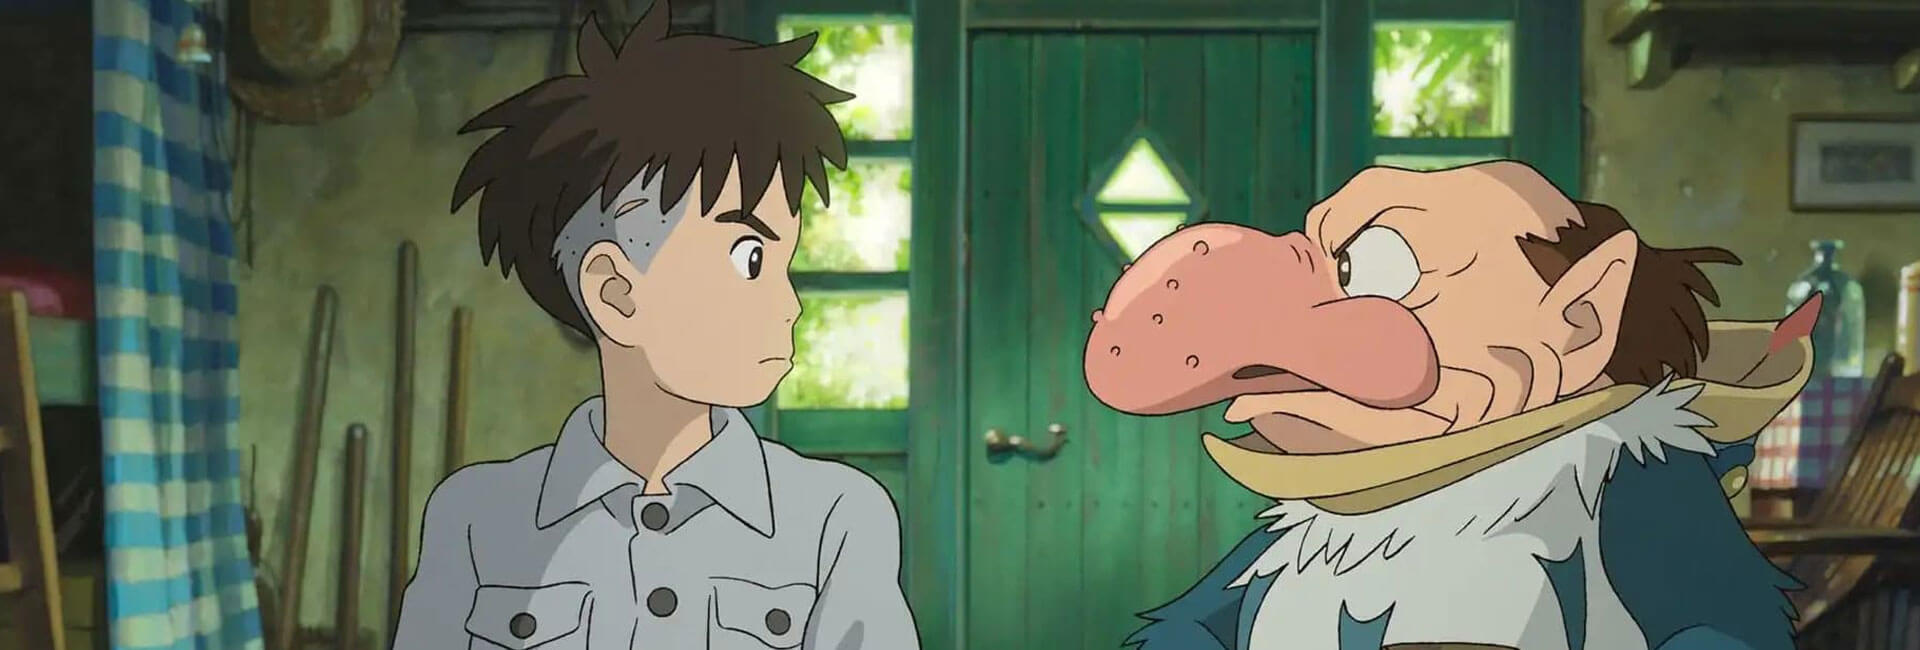 ‘O Menino e a Garça’: tudo sobre o filme de Miyazaki e seu lançamento no Brasil